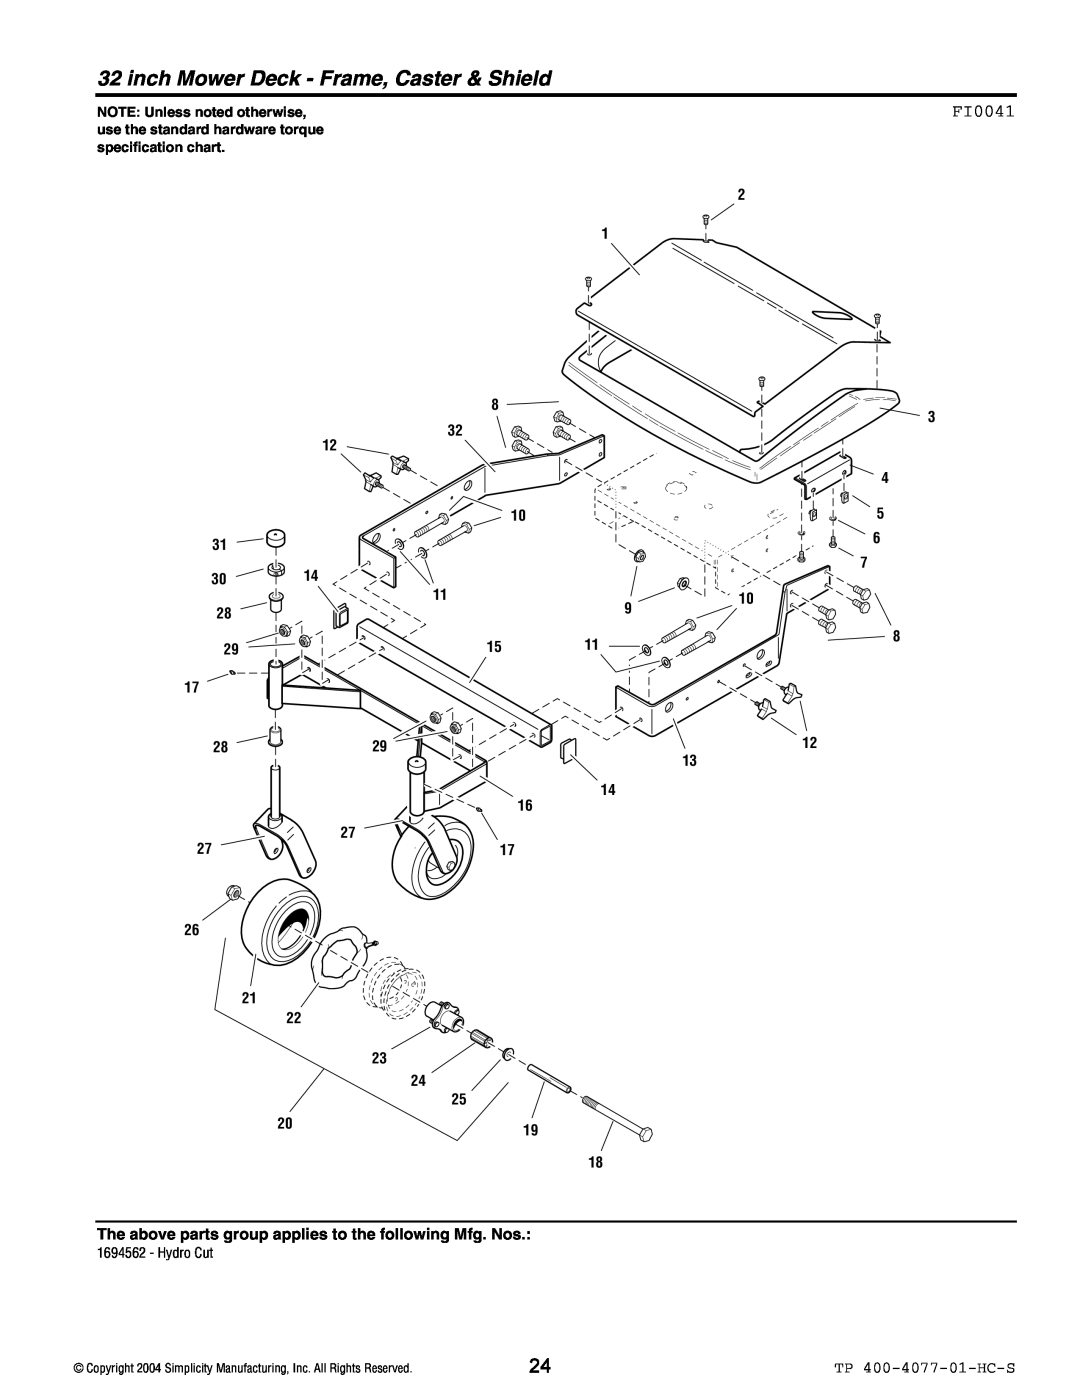 Simplicity 1694562, Hydro Cut Series manual inch Mower Deck - Frame, Caster & Shield, FI0041, TP 400-4077-01-HC-S 